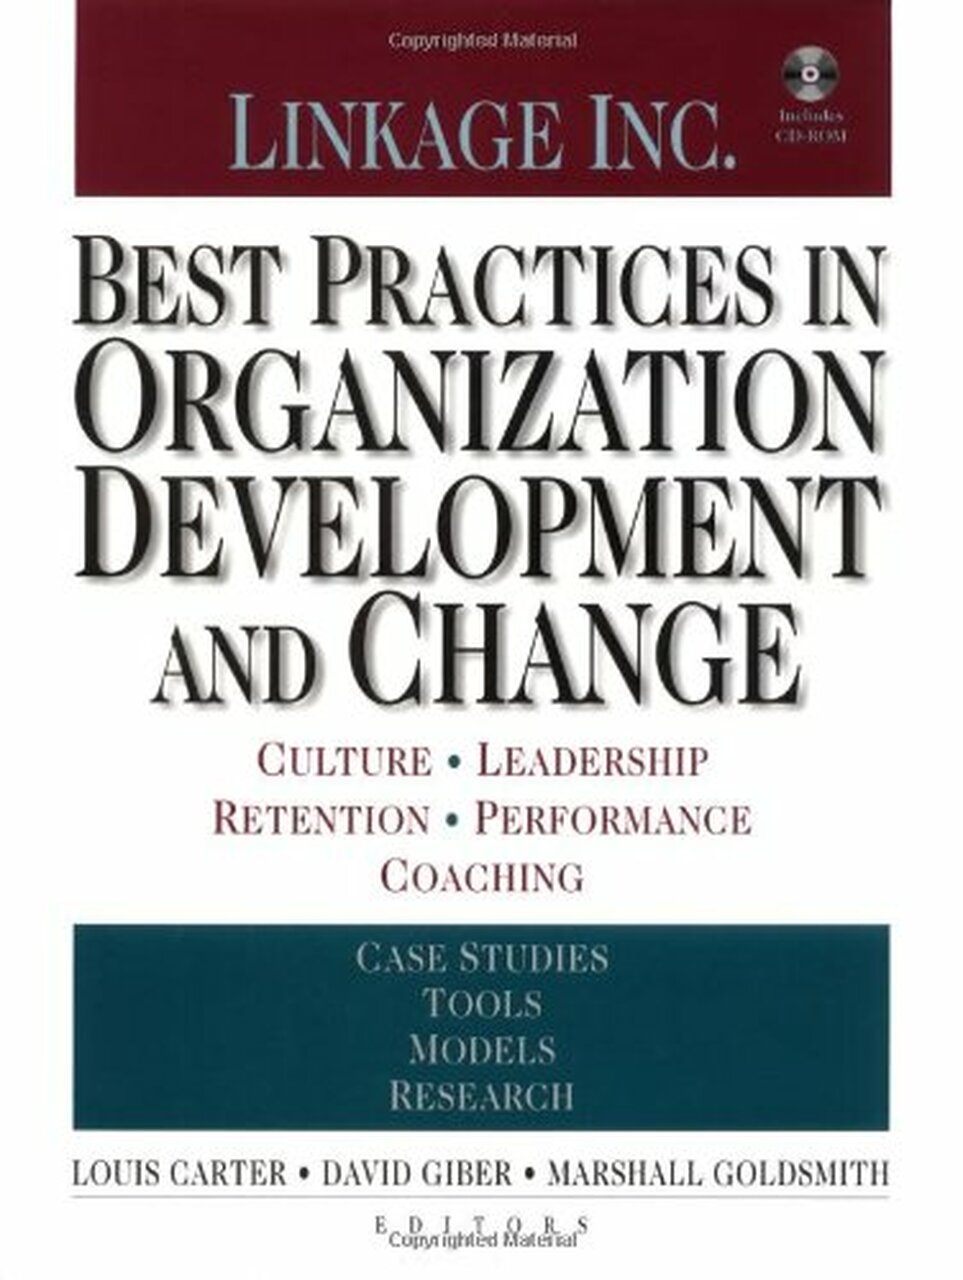 Best practices in organization development and change